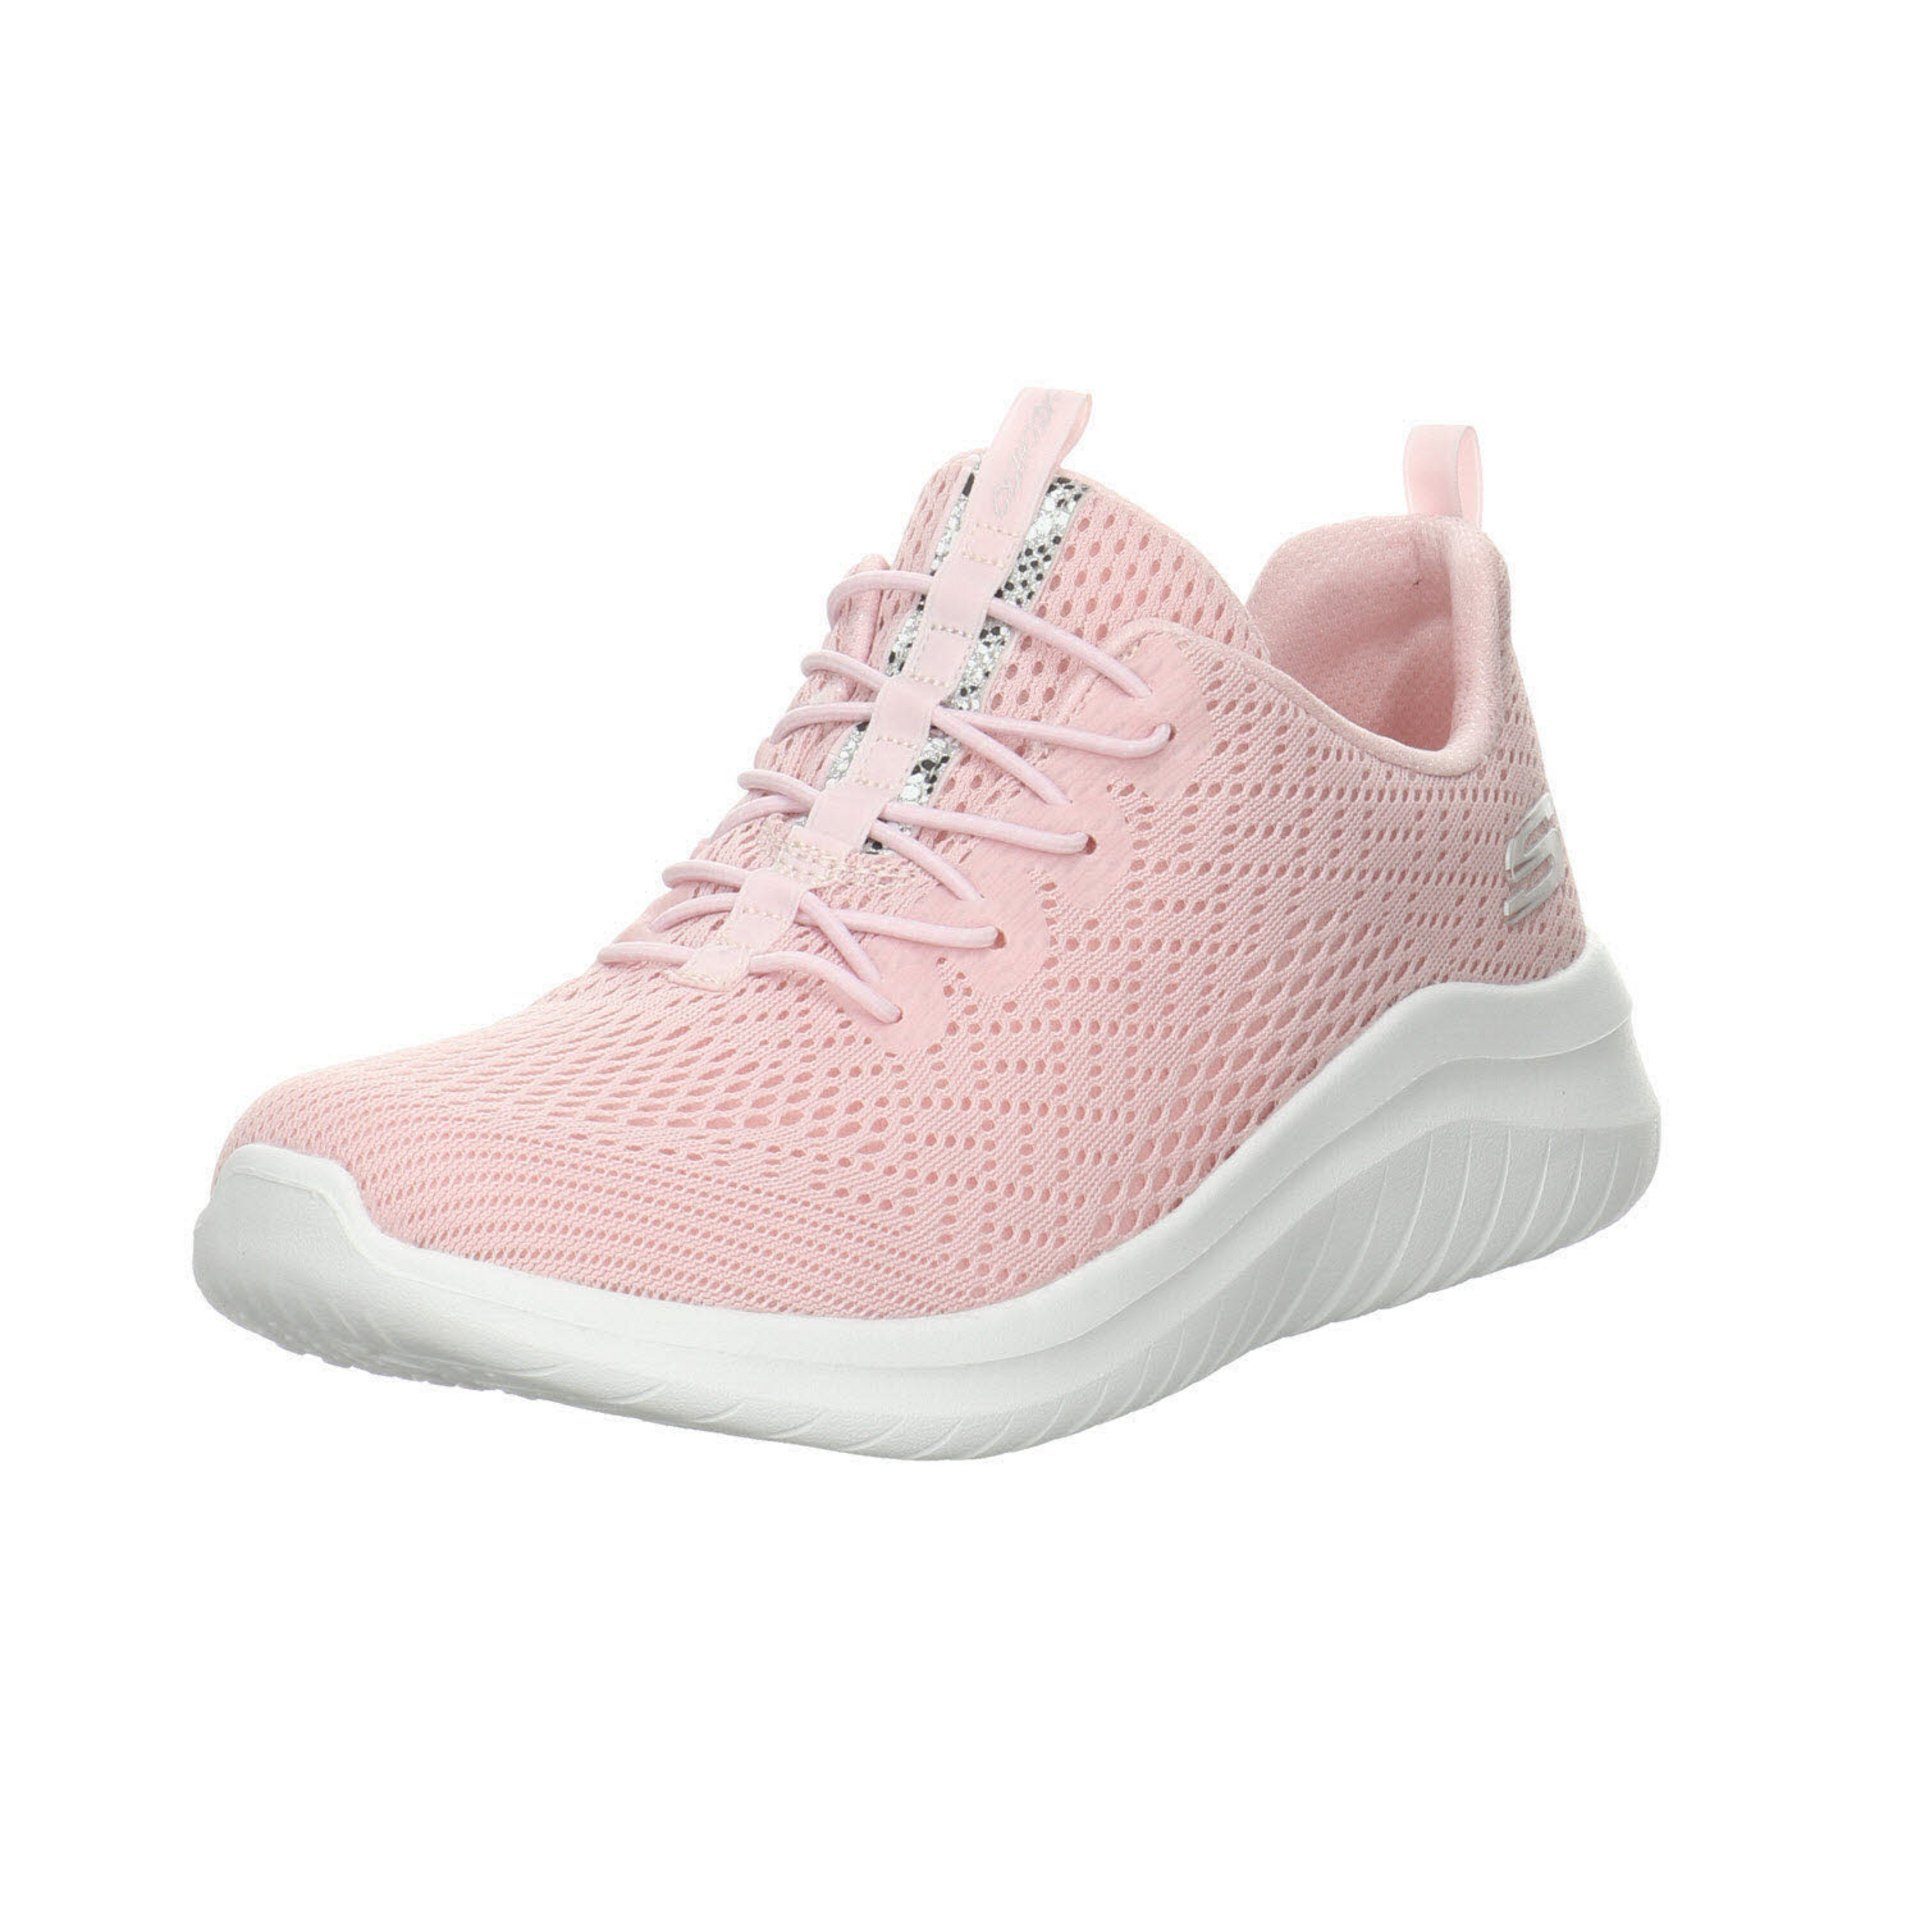 Skechers Damen Sneaker Schuhe Ultra Flex 2.0 Sneaker Sneaker Textil lt.pink/white